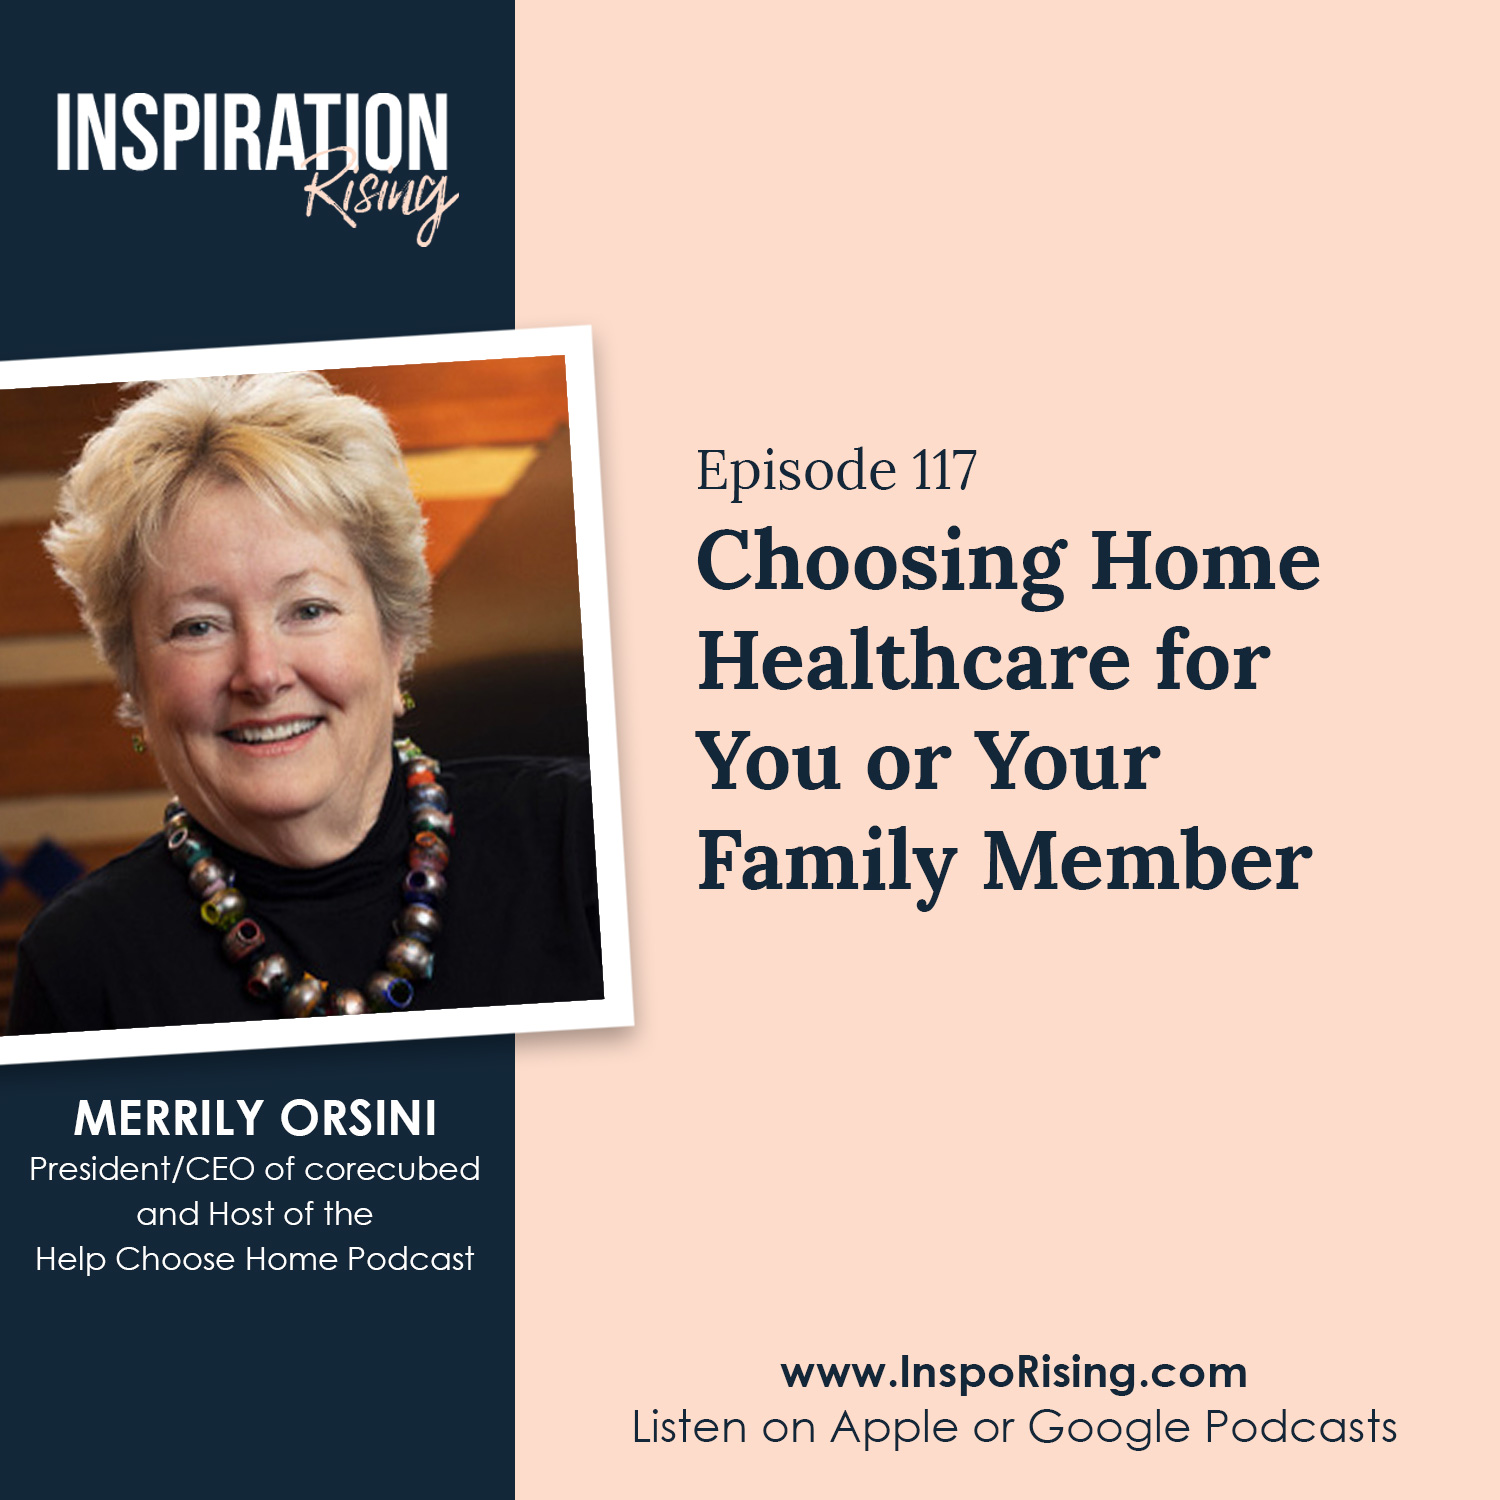 Merrily Orsini - Help Choose Home